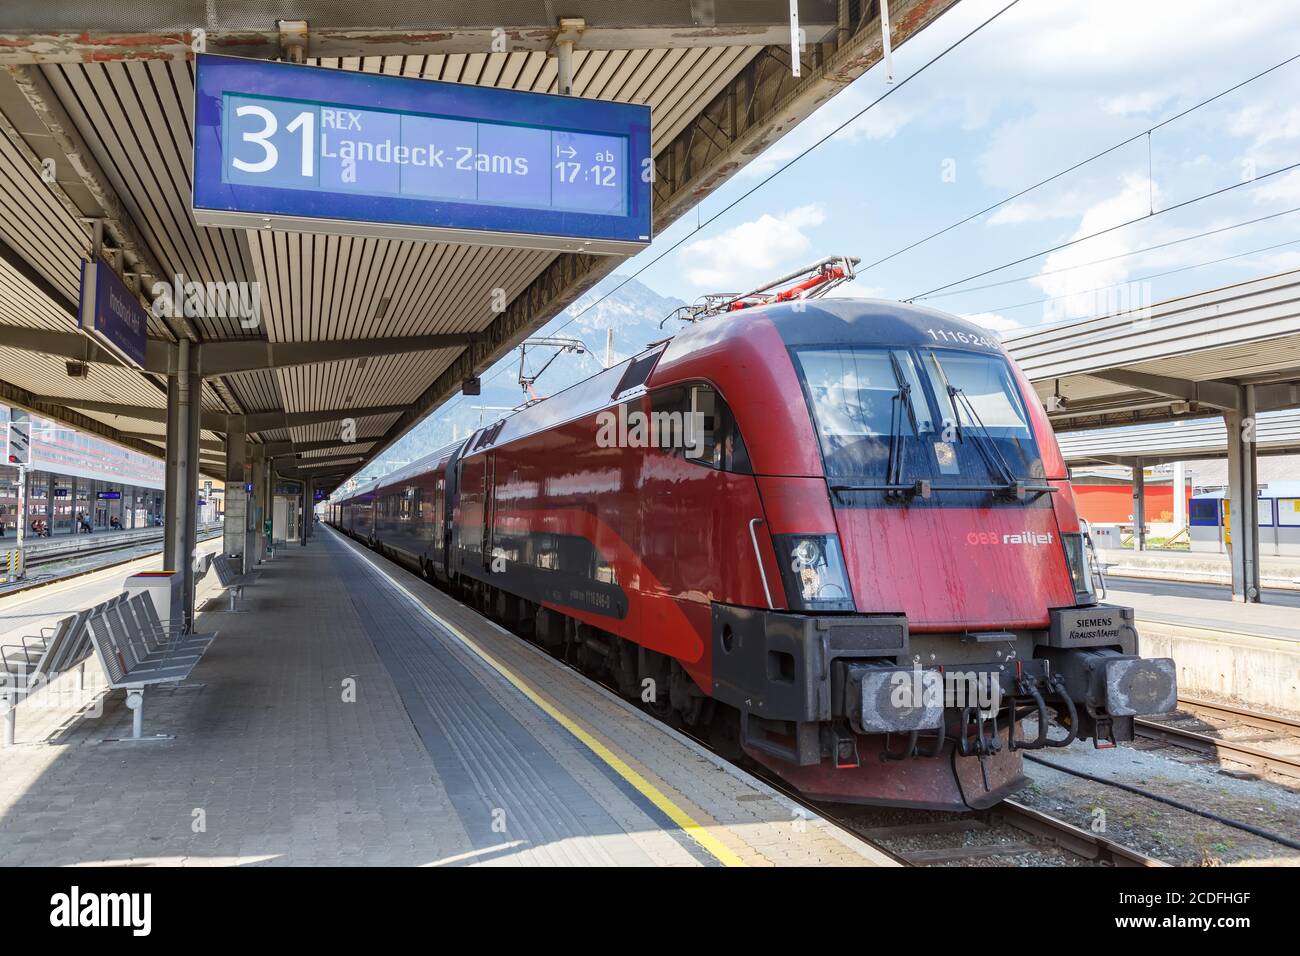 Innsbruck, Austria - 1 agosto 2020: Treno locomotiva ÖBB railjet stazione ferroviaria principale di Innsbruck Österreichische Bundesbahnen in Austria. Foto Stock